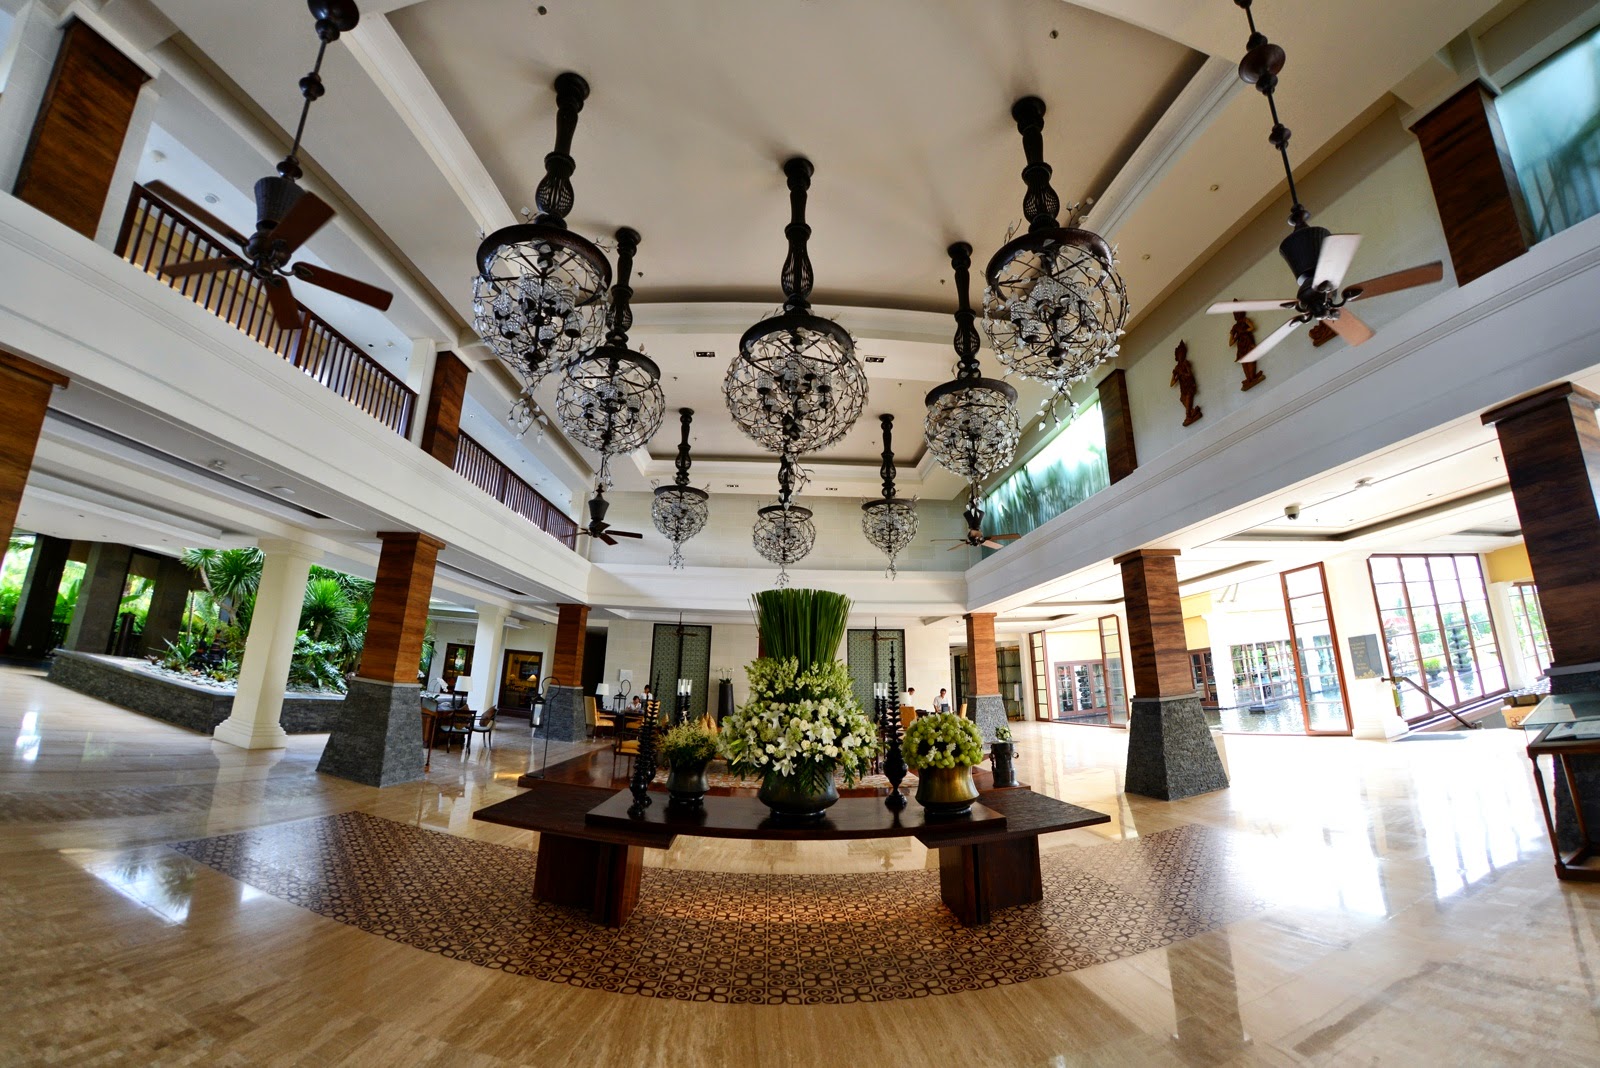 Bali Suites - Grand Astor Suite of The St. Regis Bali Resort - YouTube